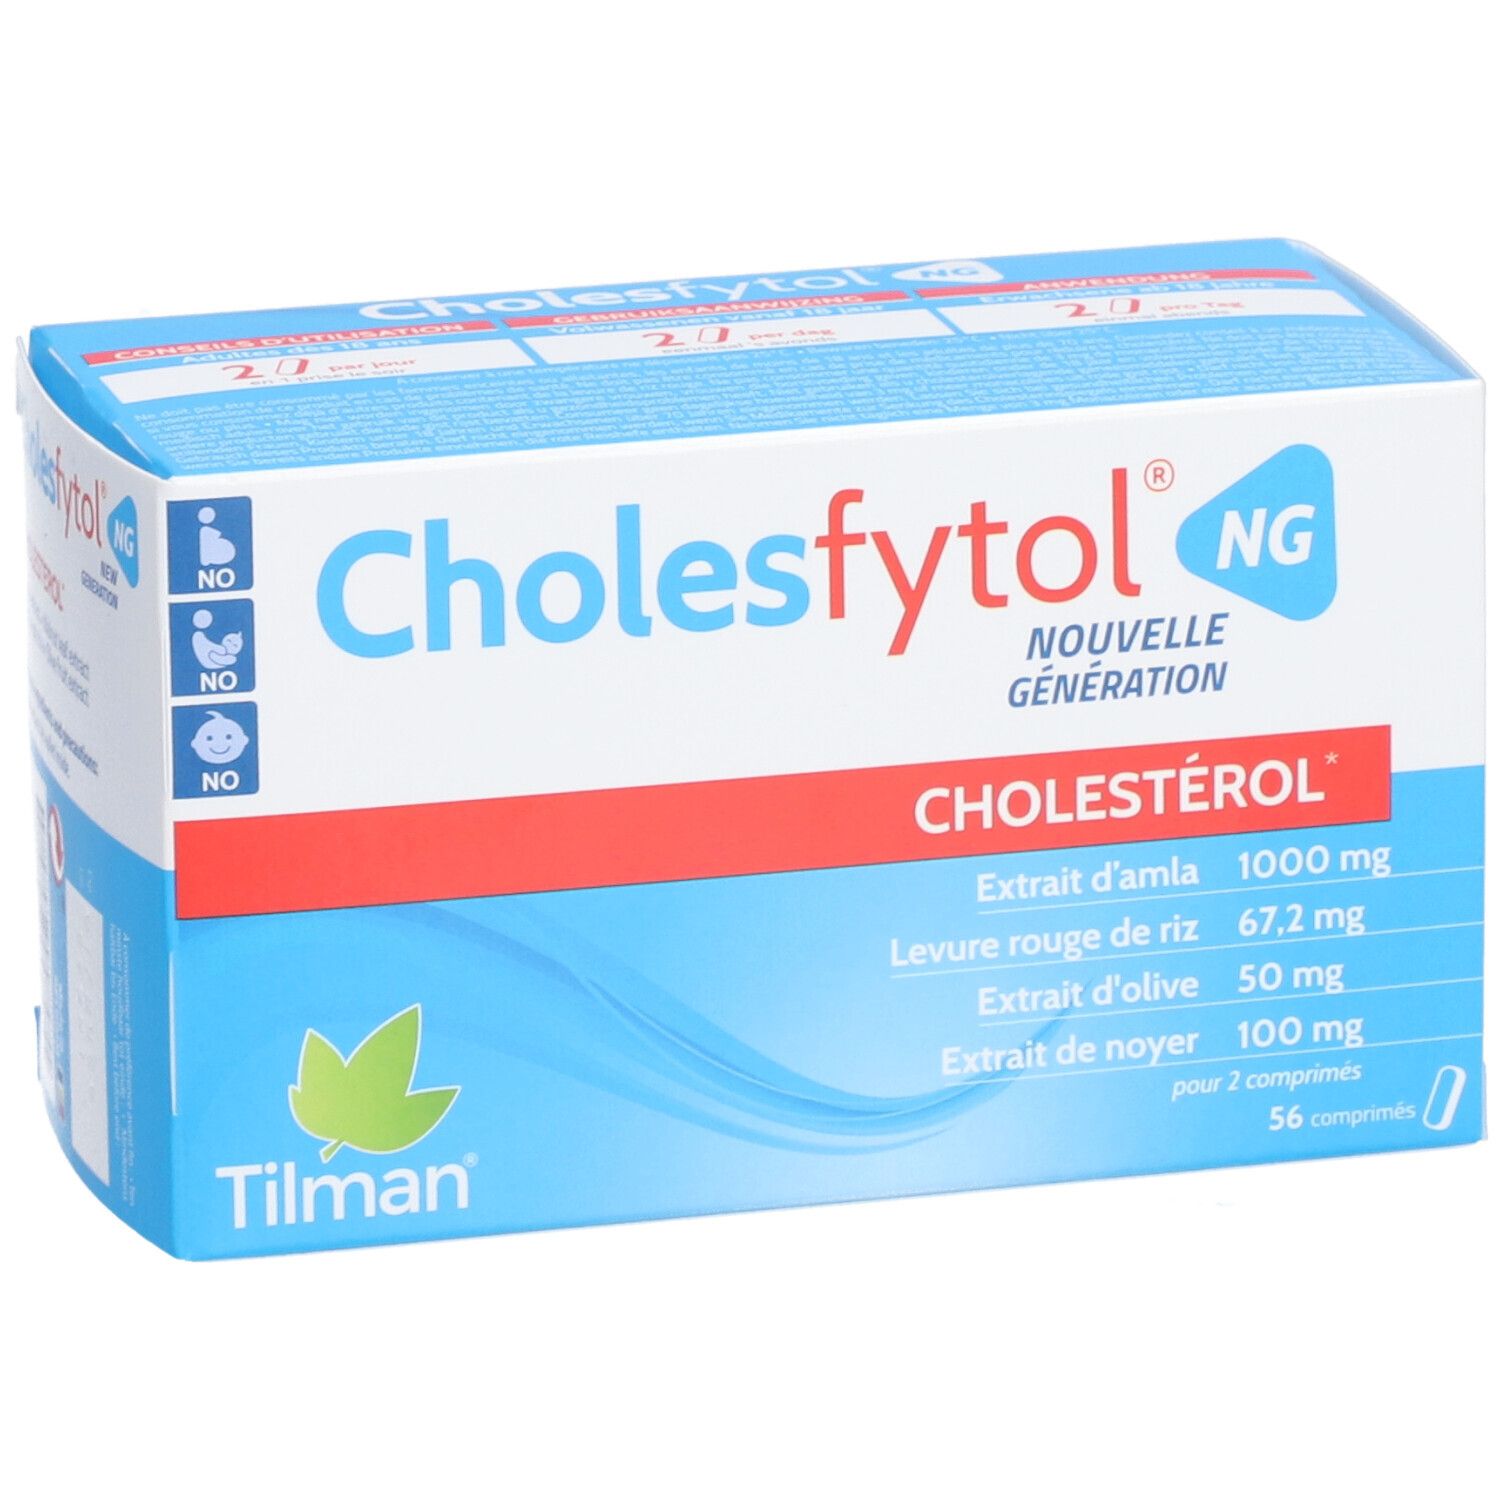 Tilman® Cholesfytol® NG